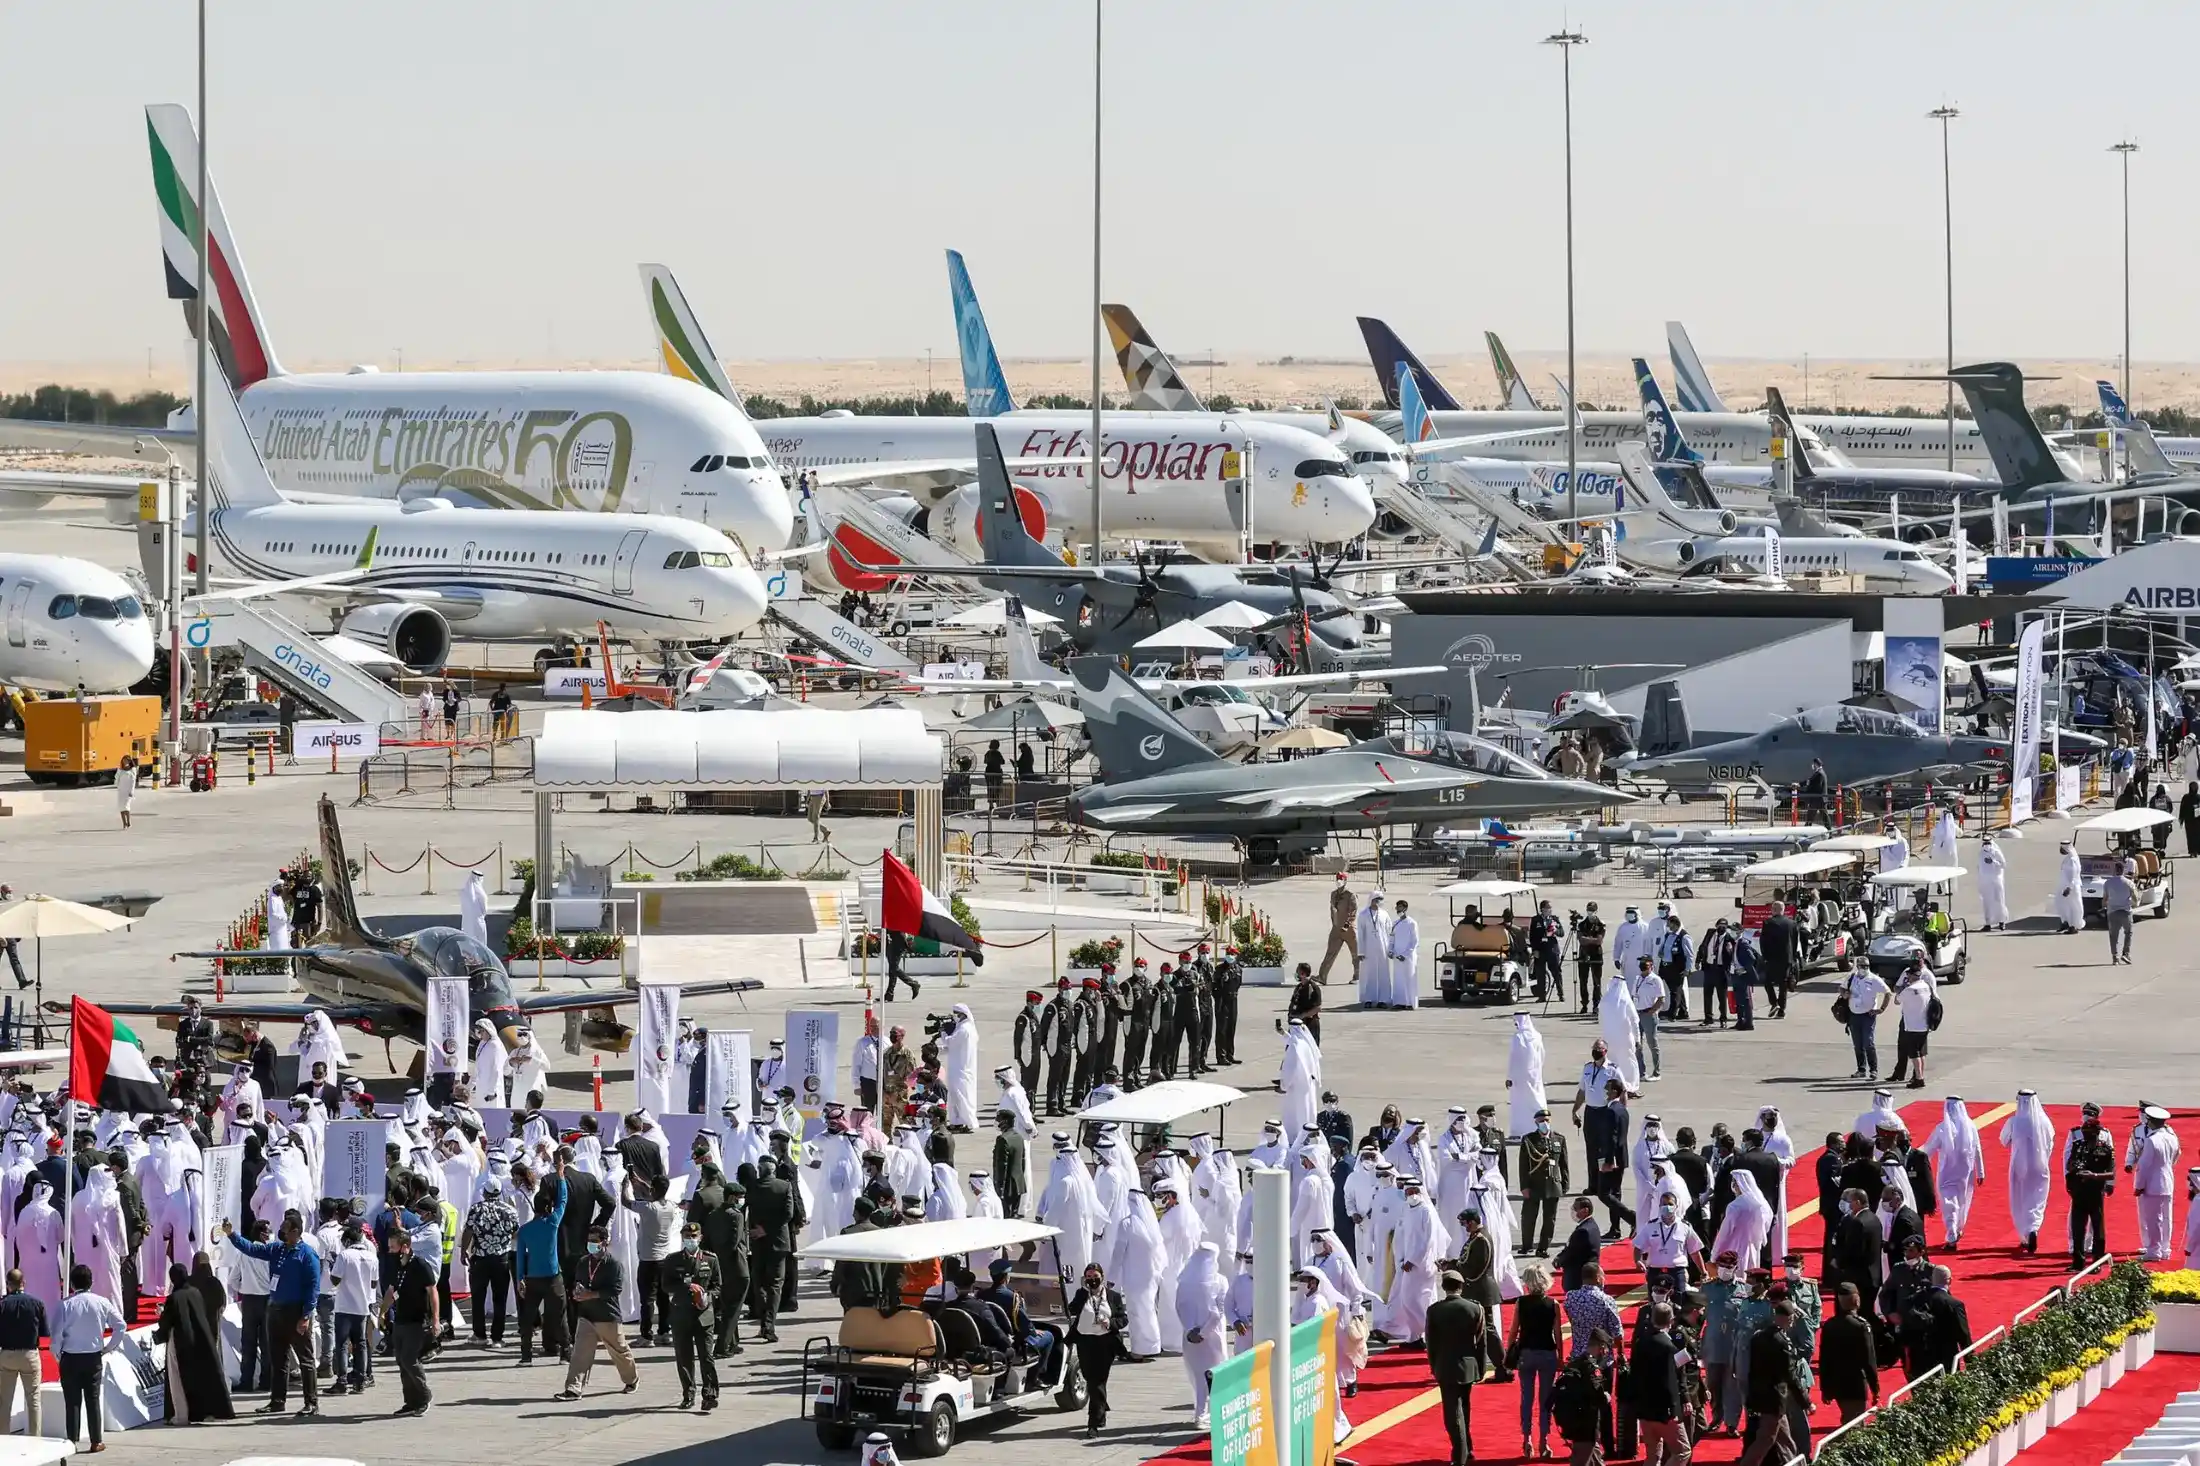 Dubai Airshow Outdoor Display